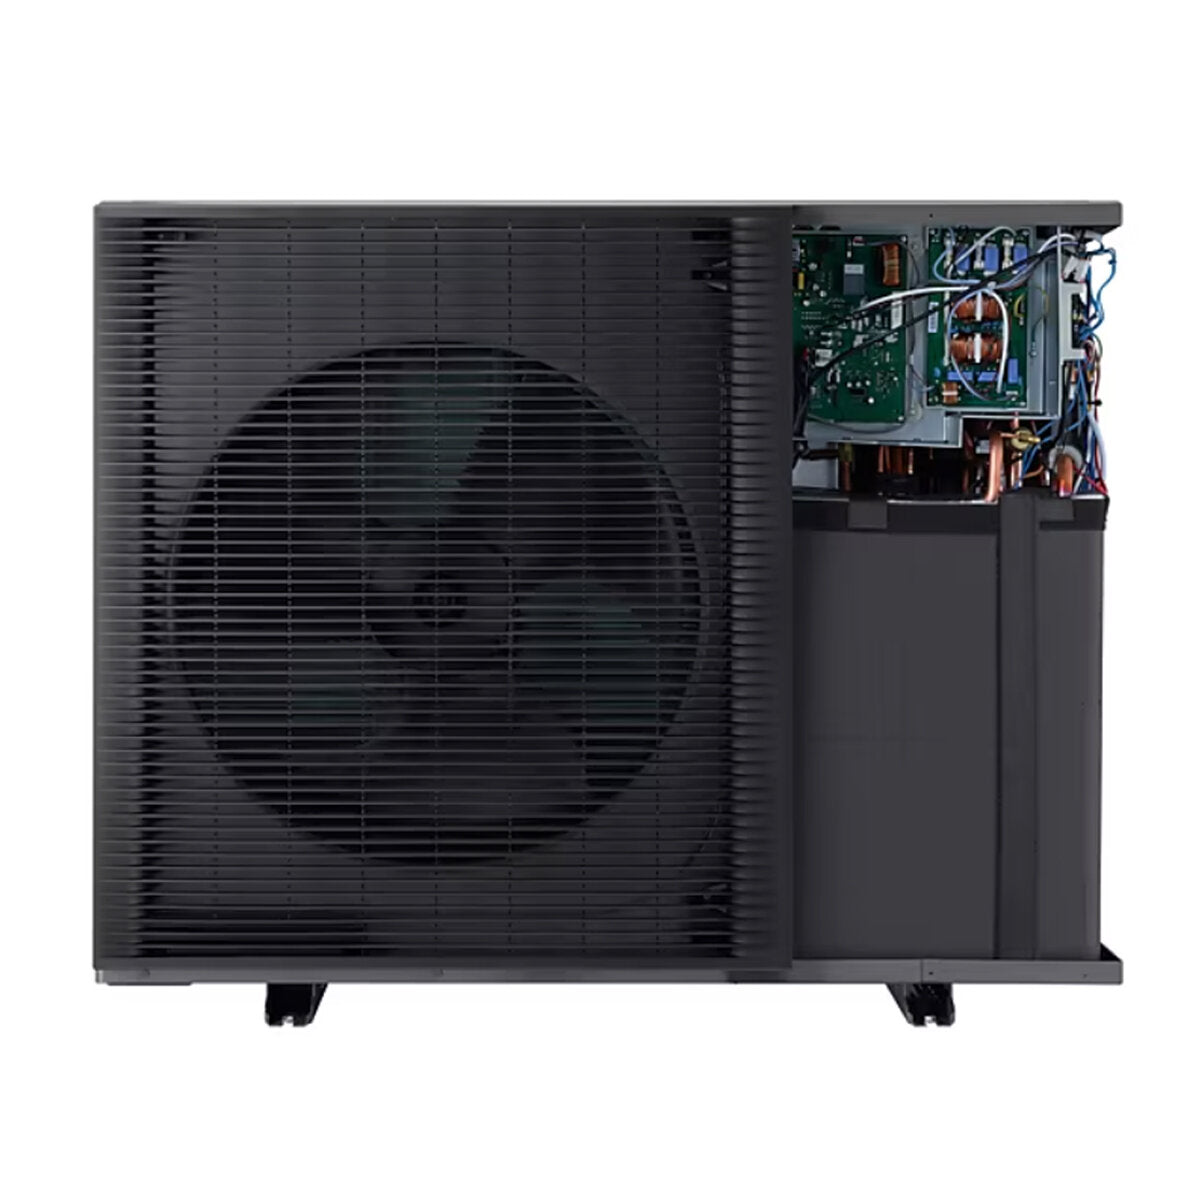 Samsung EHS Mono HT Quiet 12 kW single-phase R32 A++ high temperature air-water heat pump